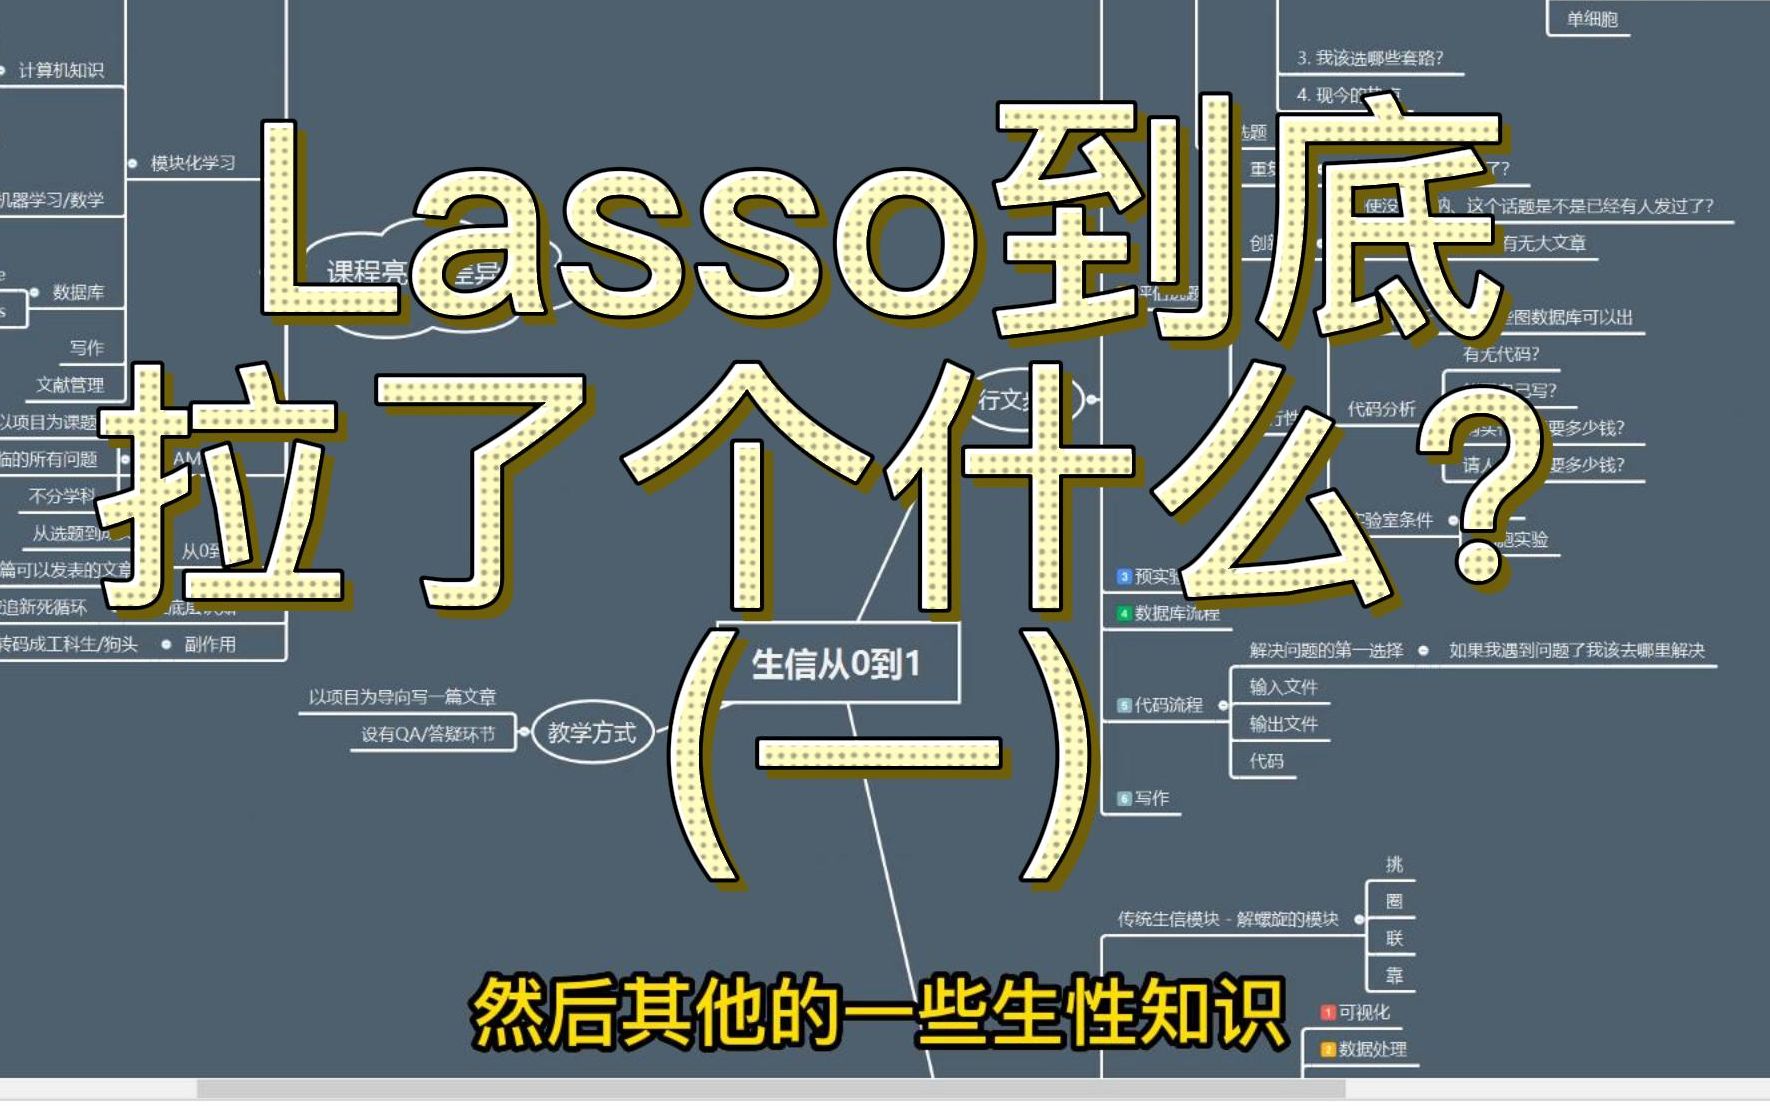 Lasso到底拉了个什么？(一)|10分钟生信小课堂 | 机器学习板块 | R语言| Python |医学生|